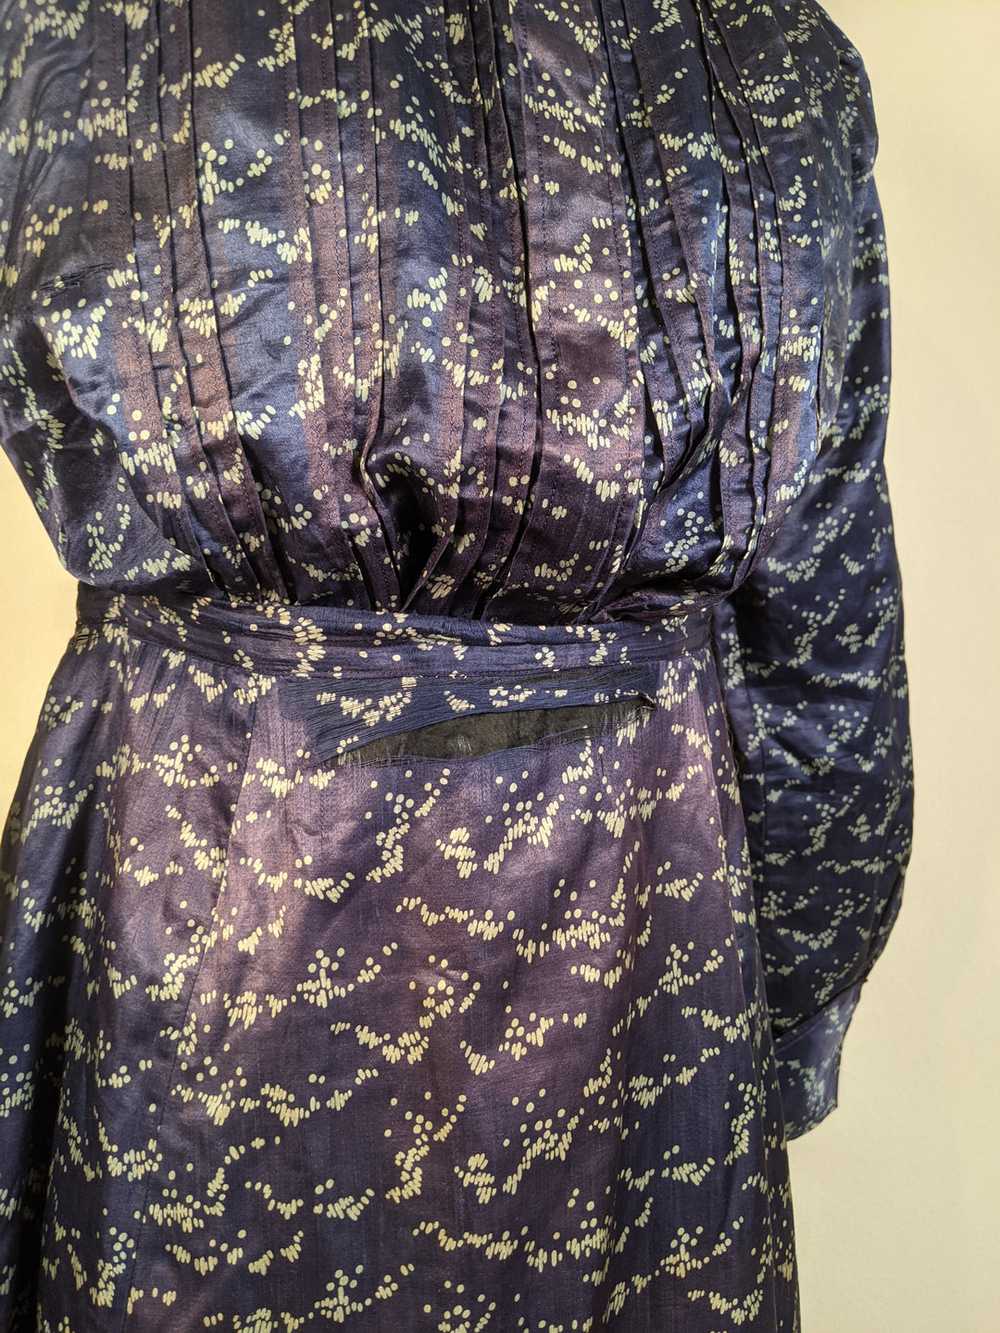 Silk Dress c. 1903 - image 6